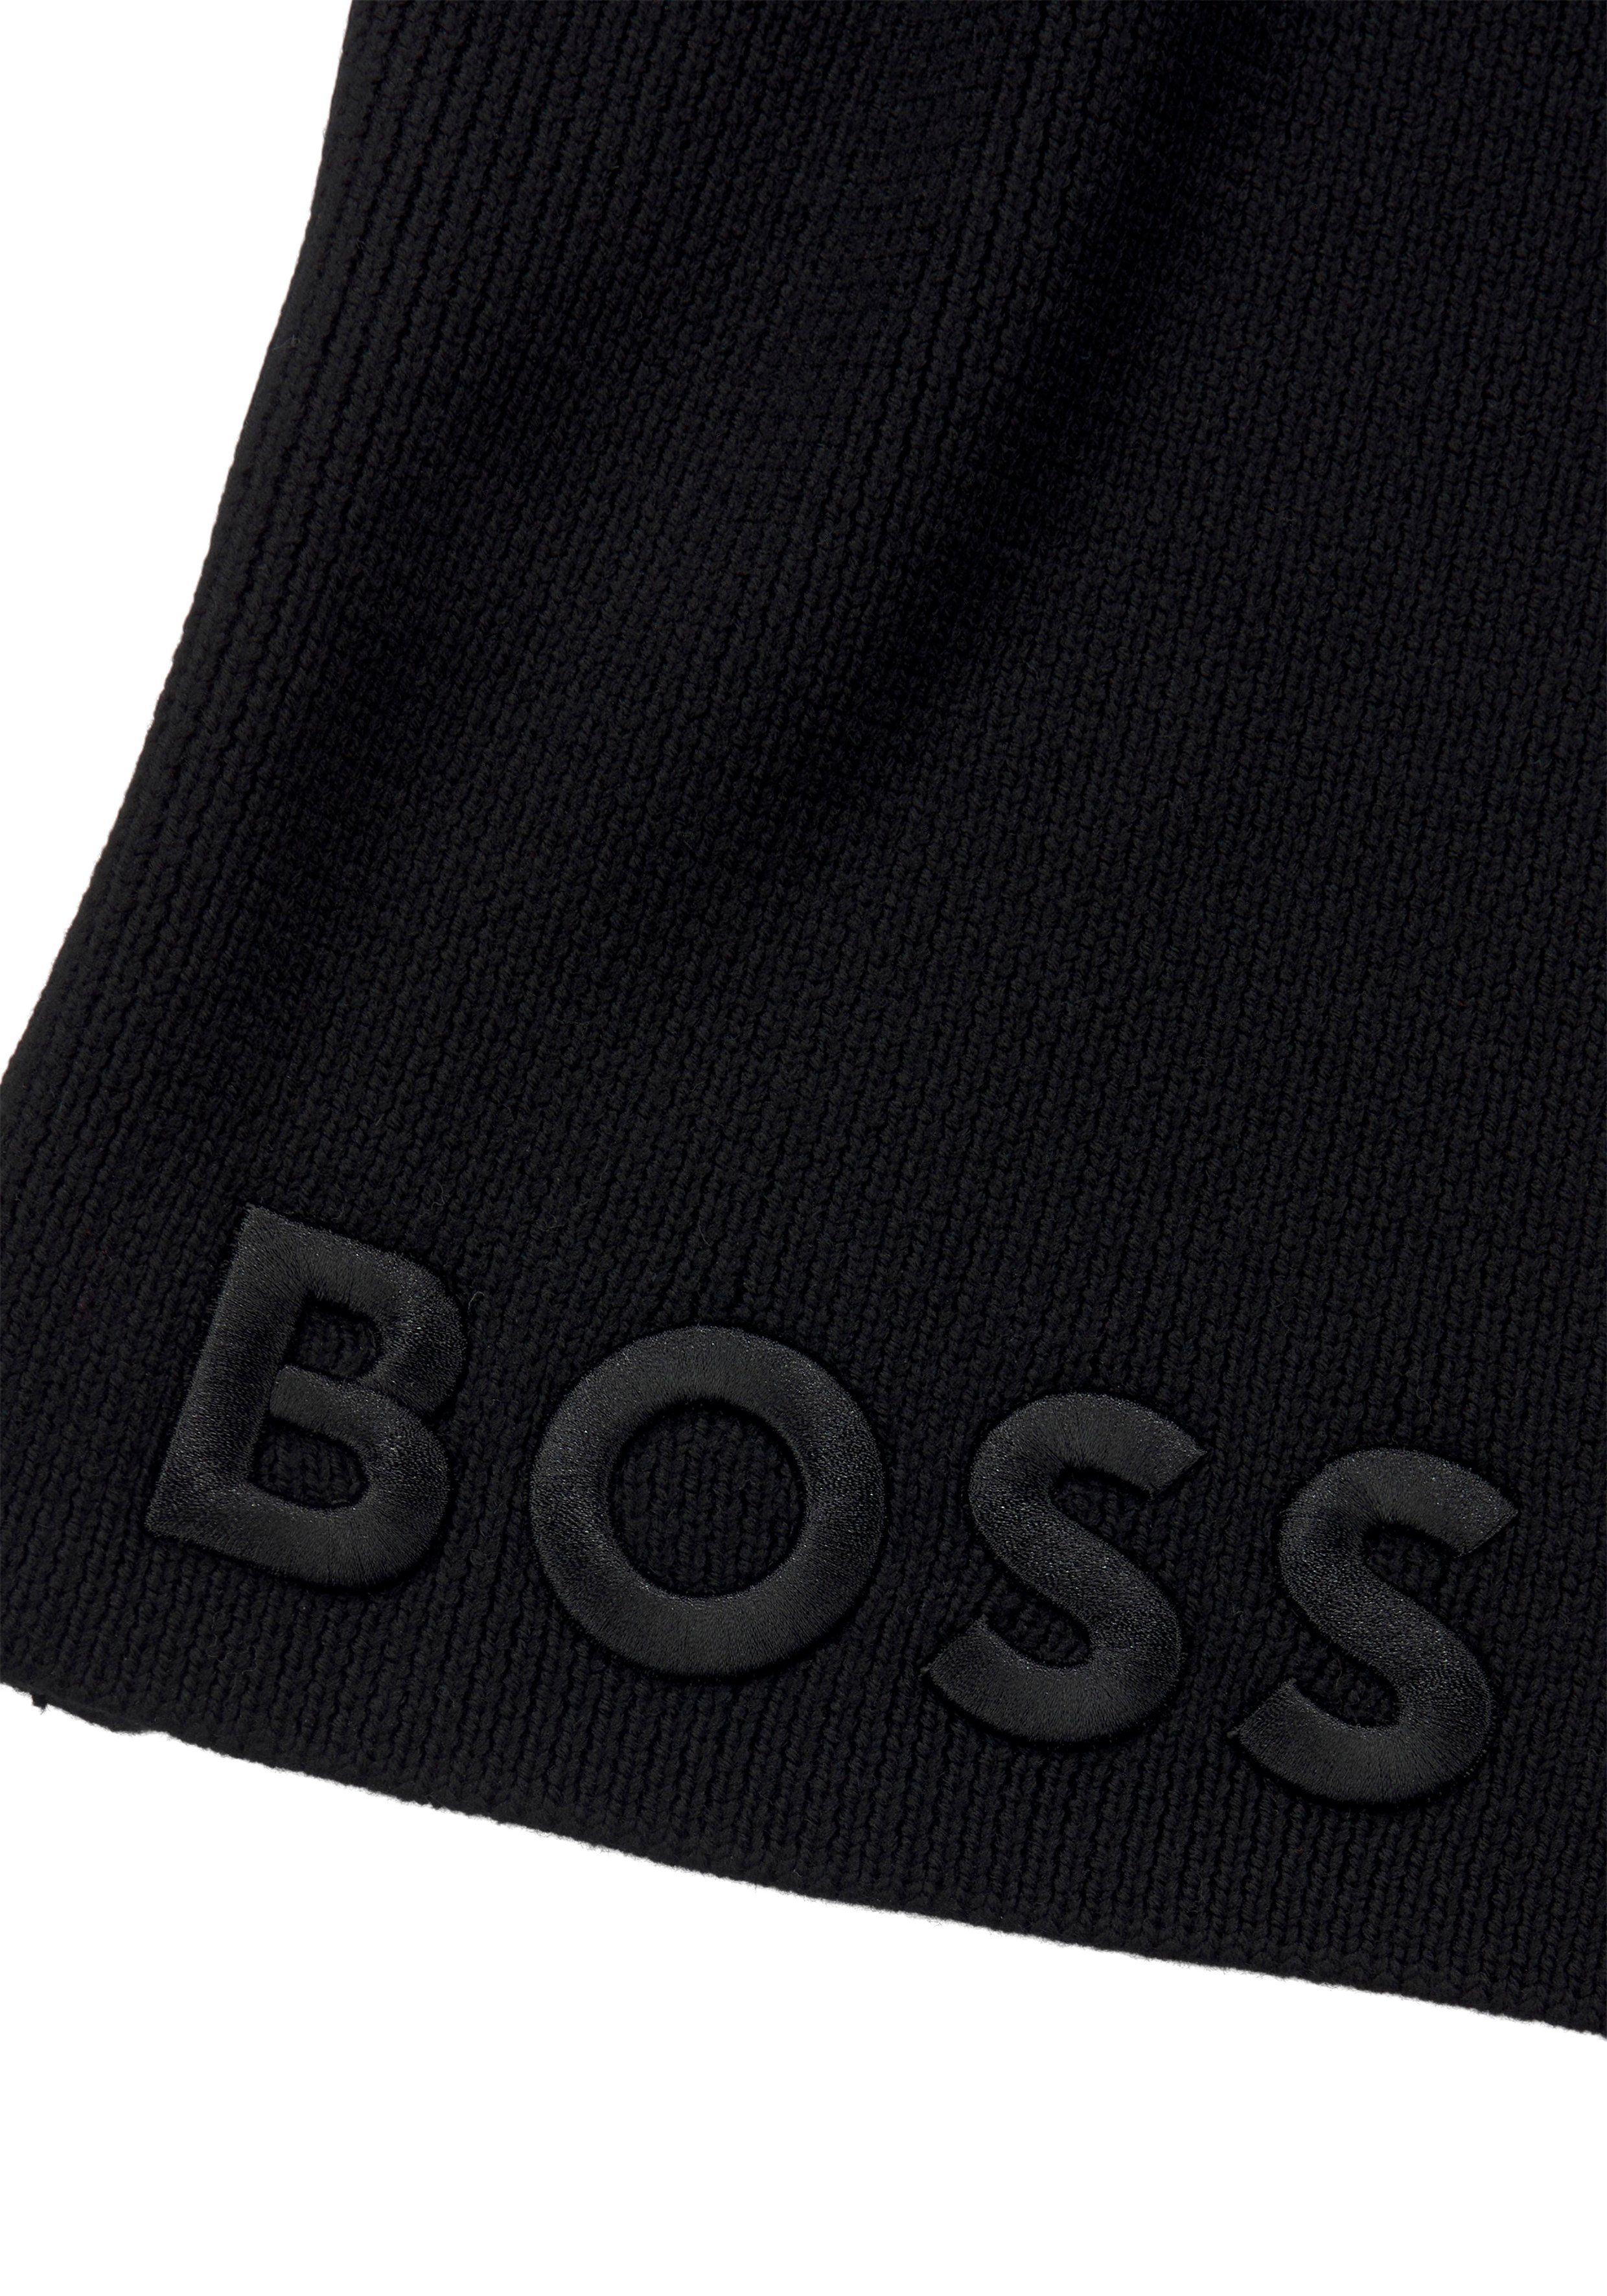 Black tonaler BOSS Schal BOSS von Schal Boss Lara_scarf, Logo-Stickerei, mit Womanswear